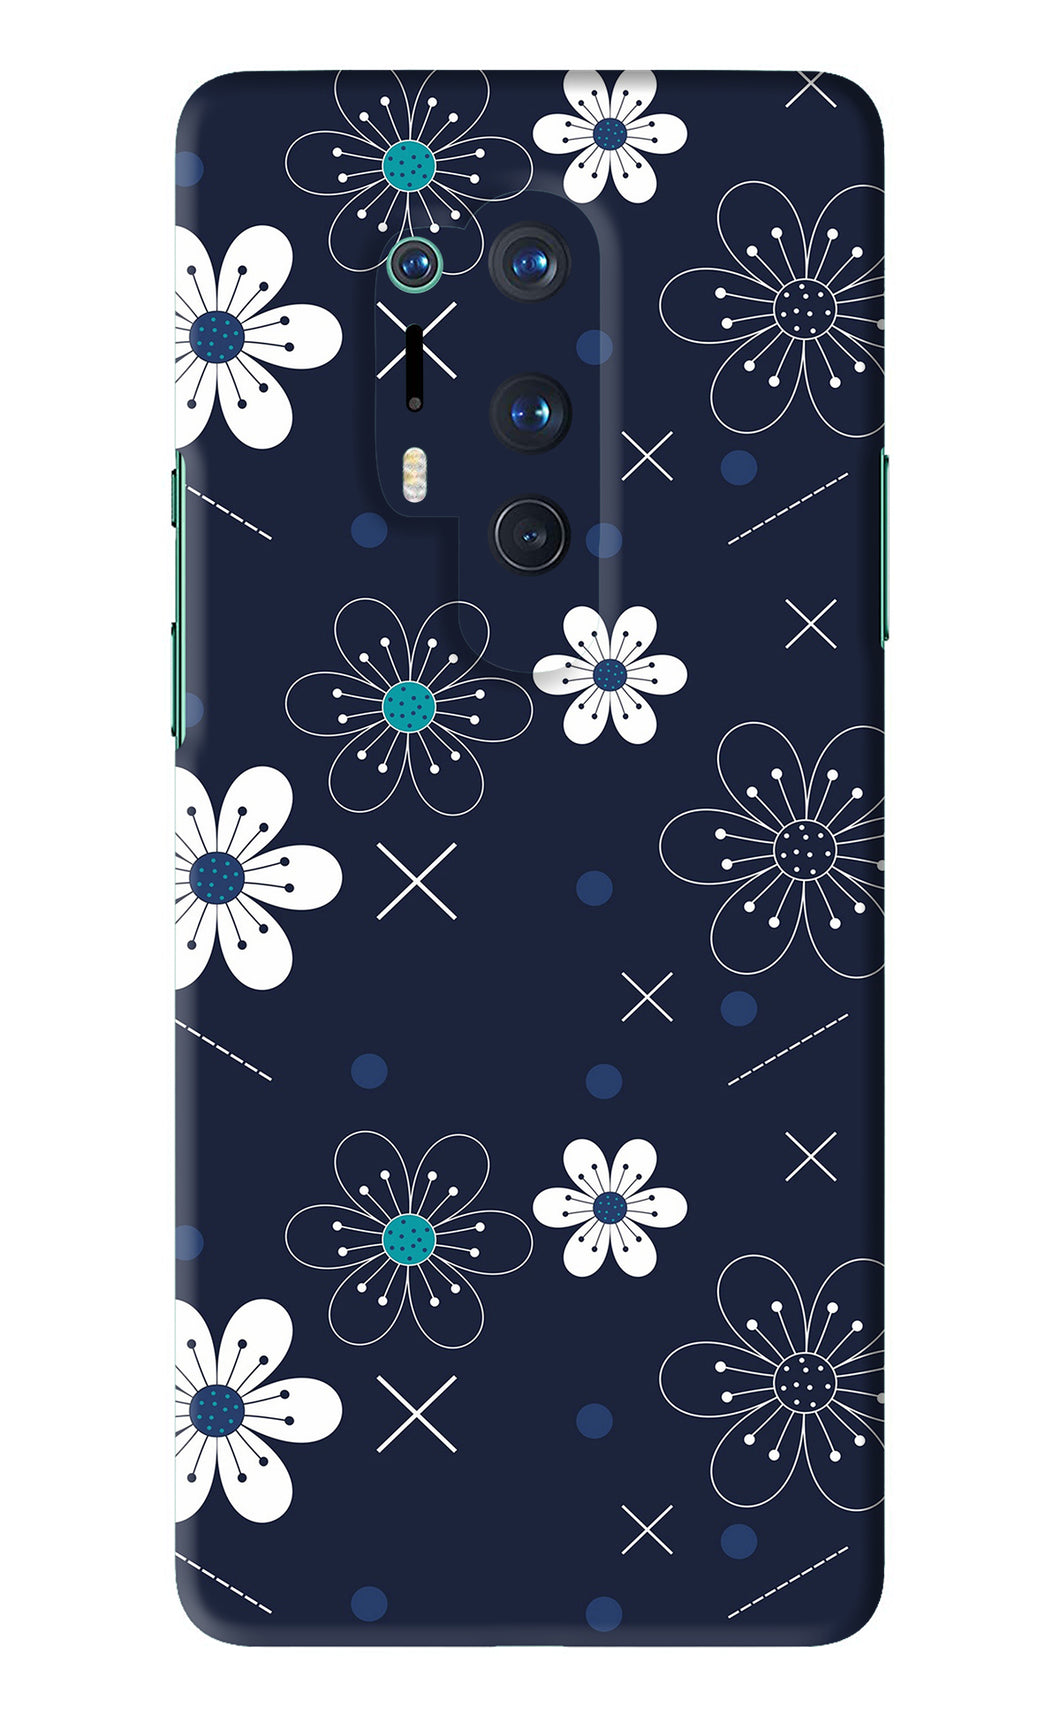 Flowers 4 OnePlus 8 Pro Back Skin Wrap